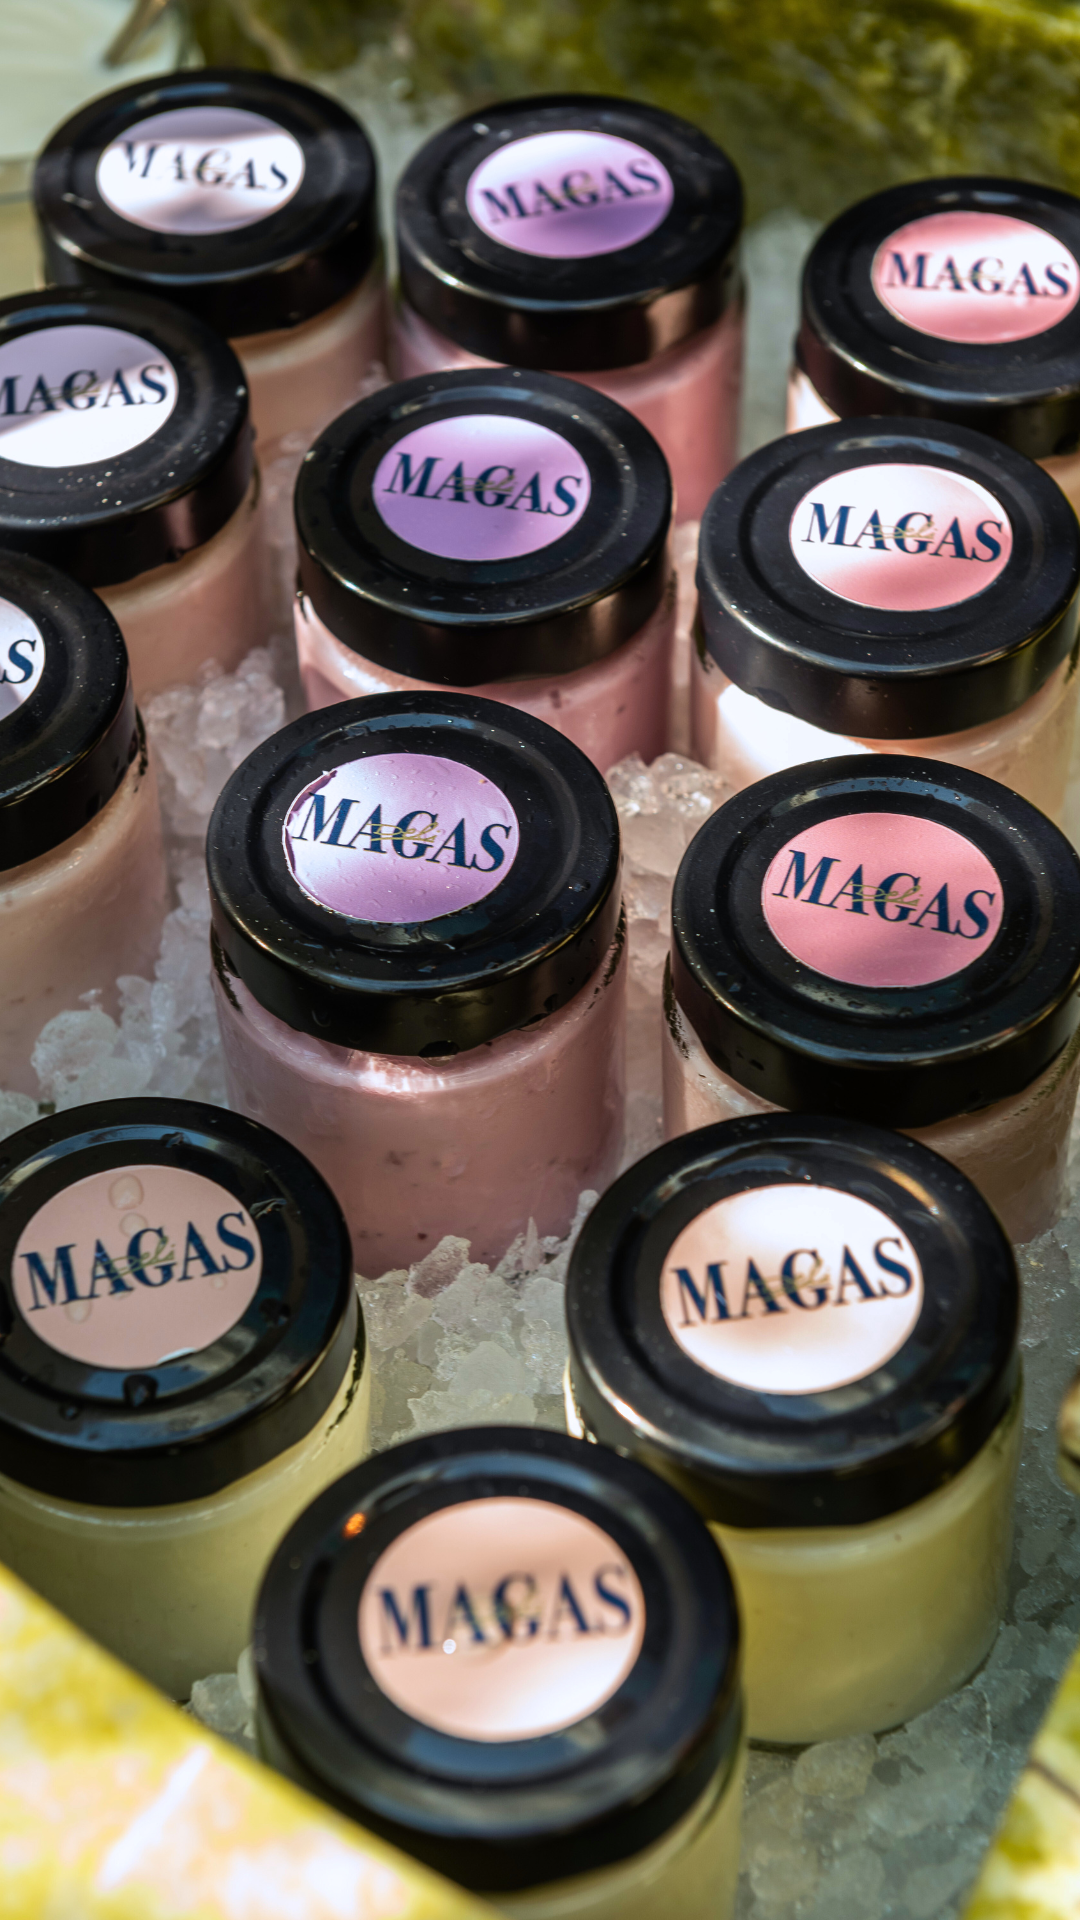 Maga's products in storage jars